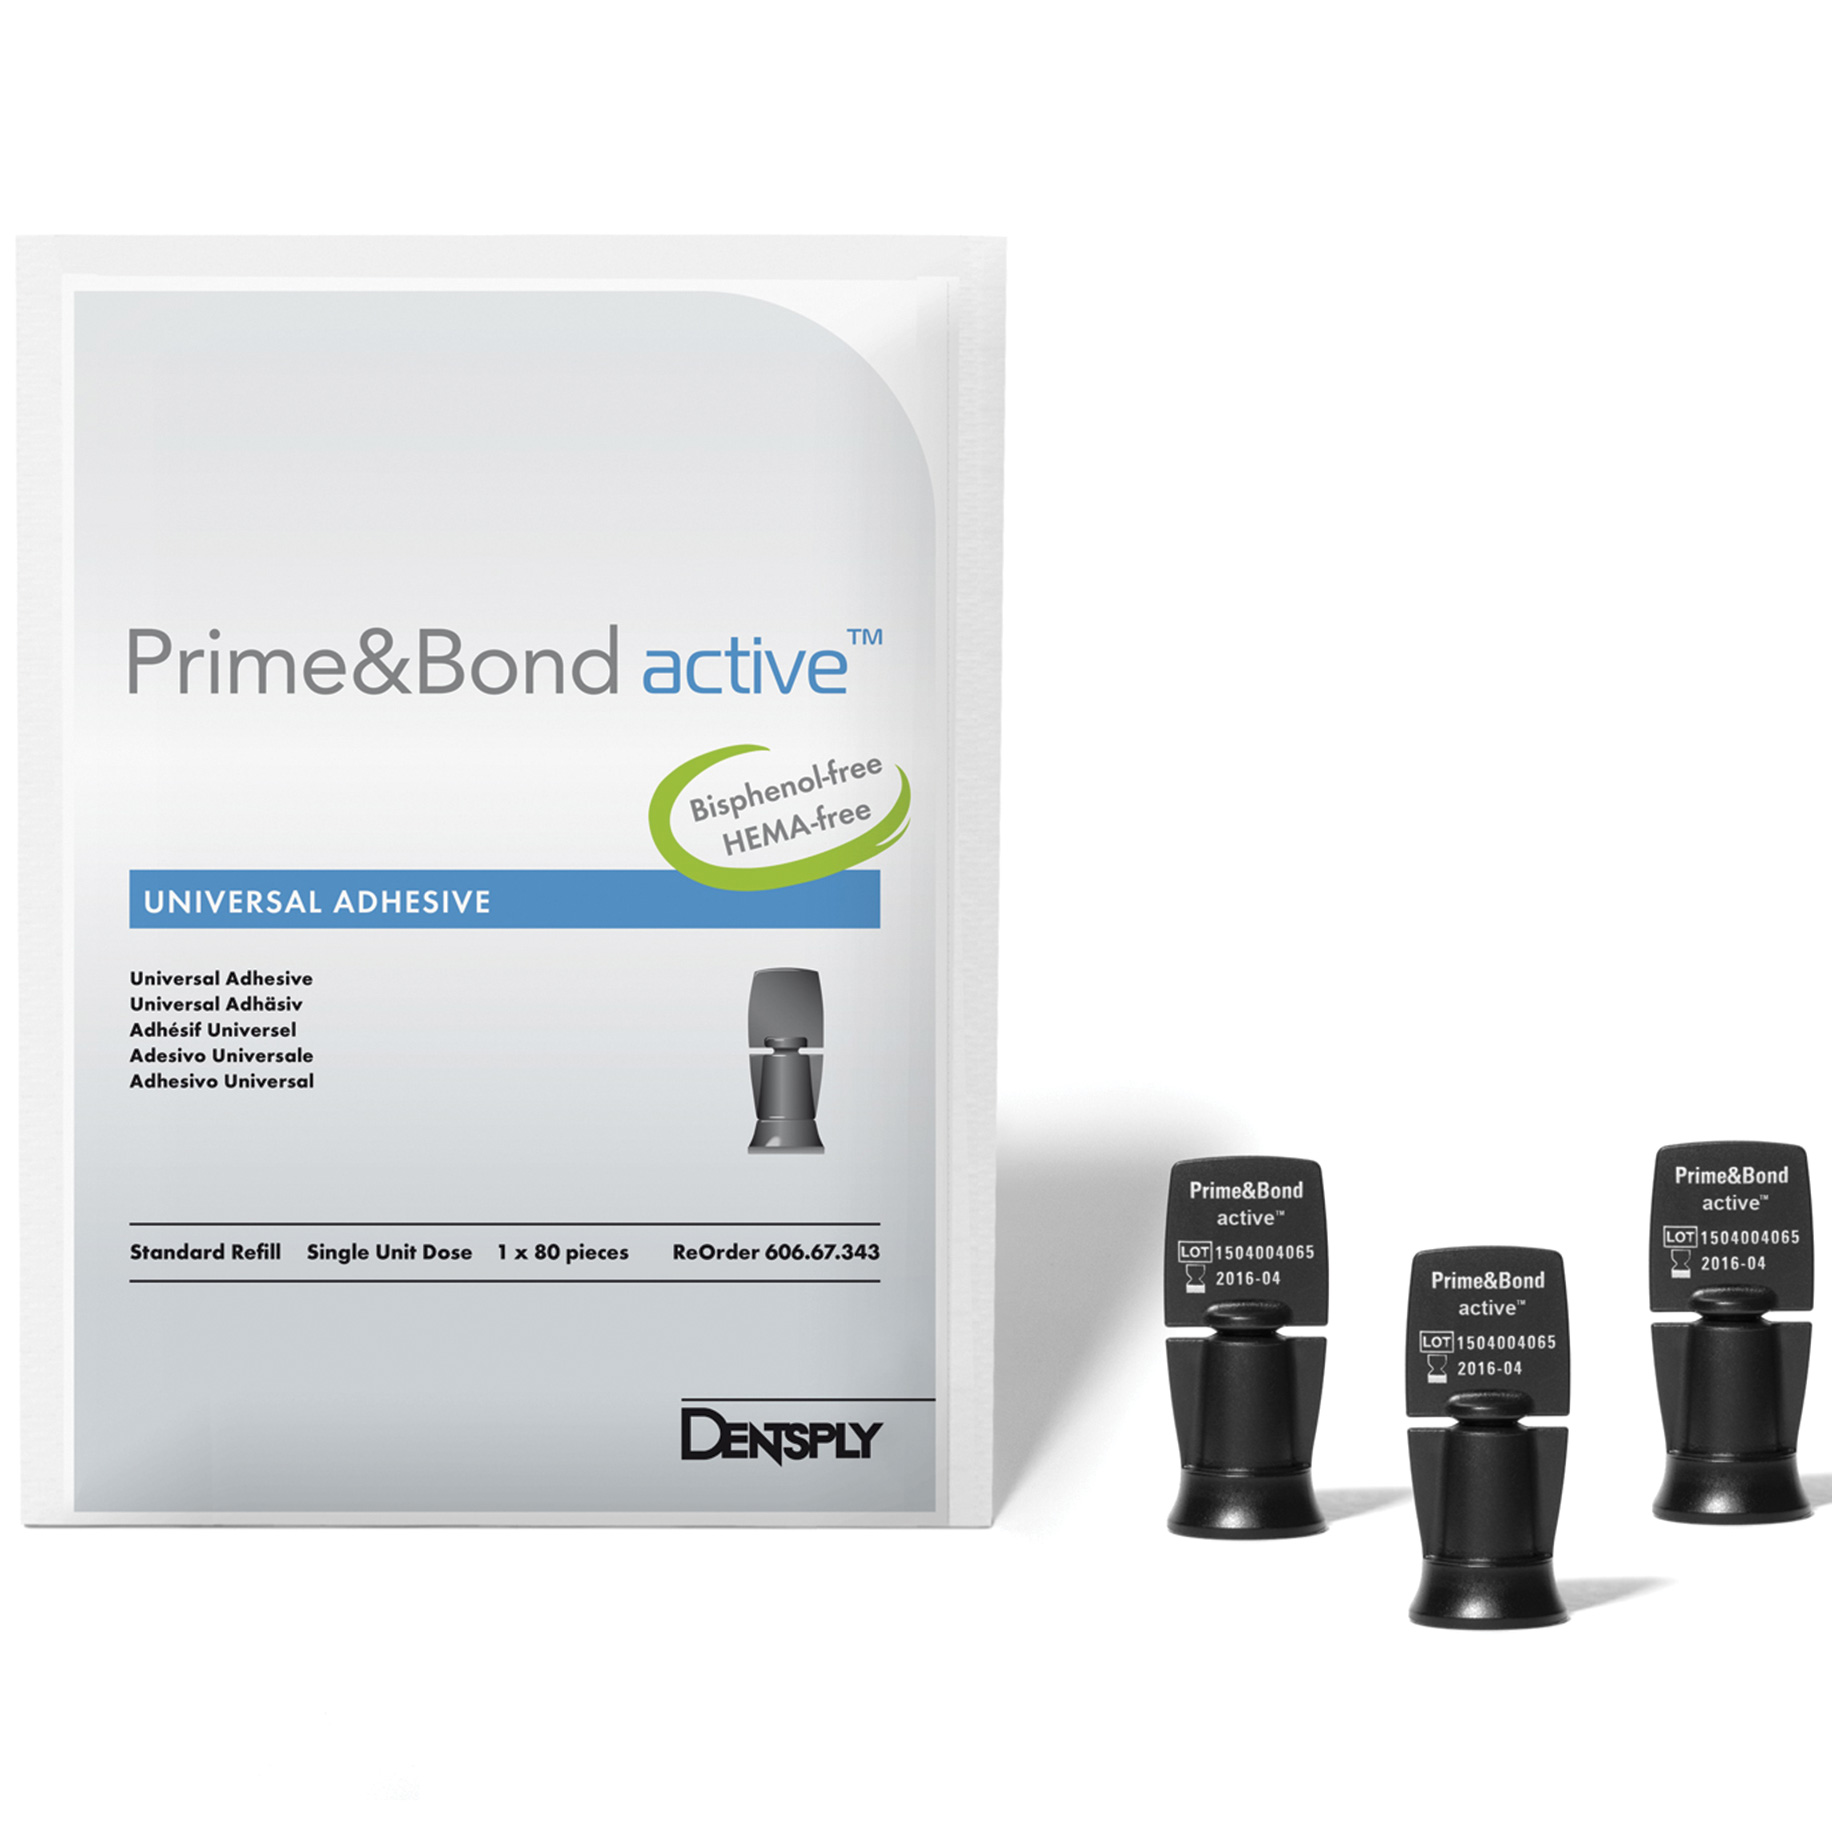 Prime&Bond active Unit Dose Refill Pack 